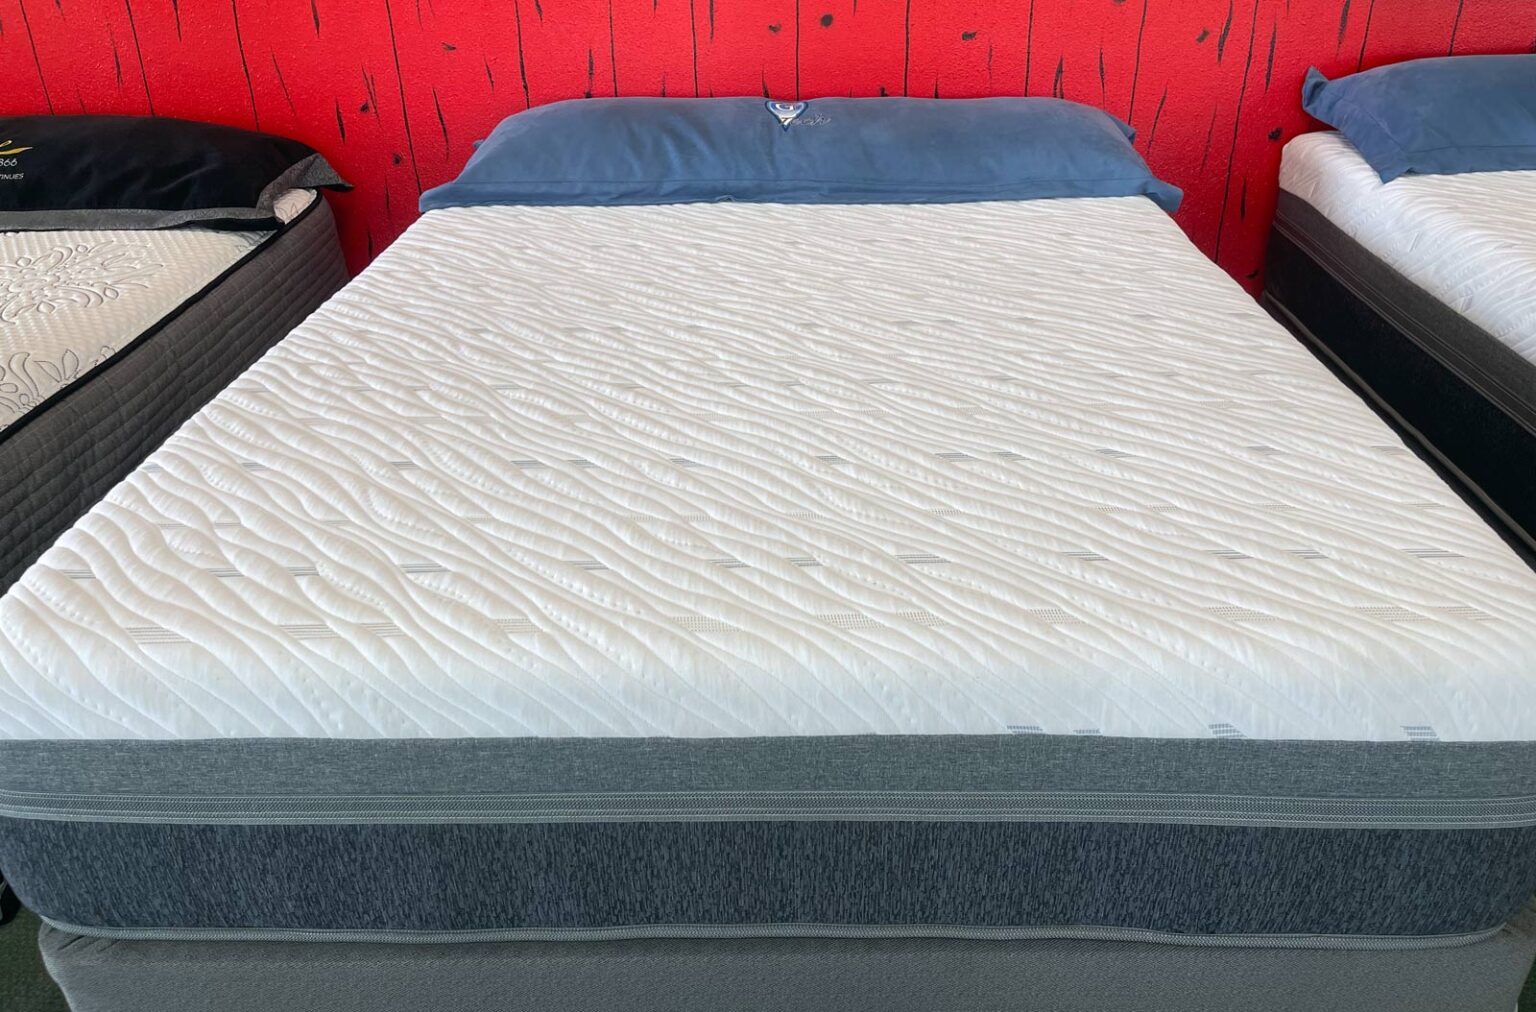 sound a sleep air mattresses